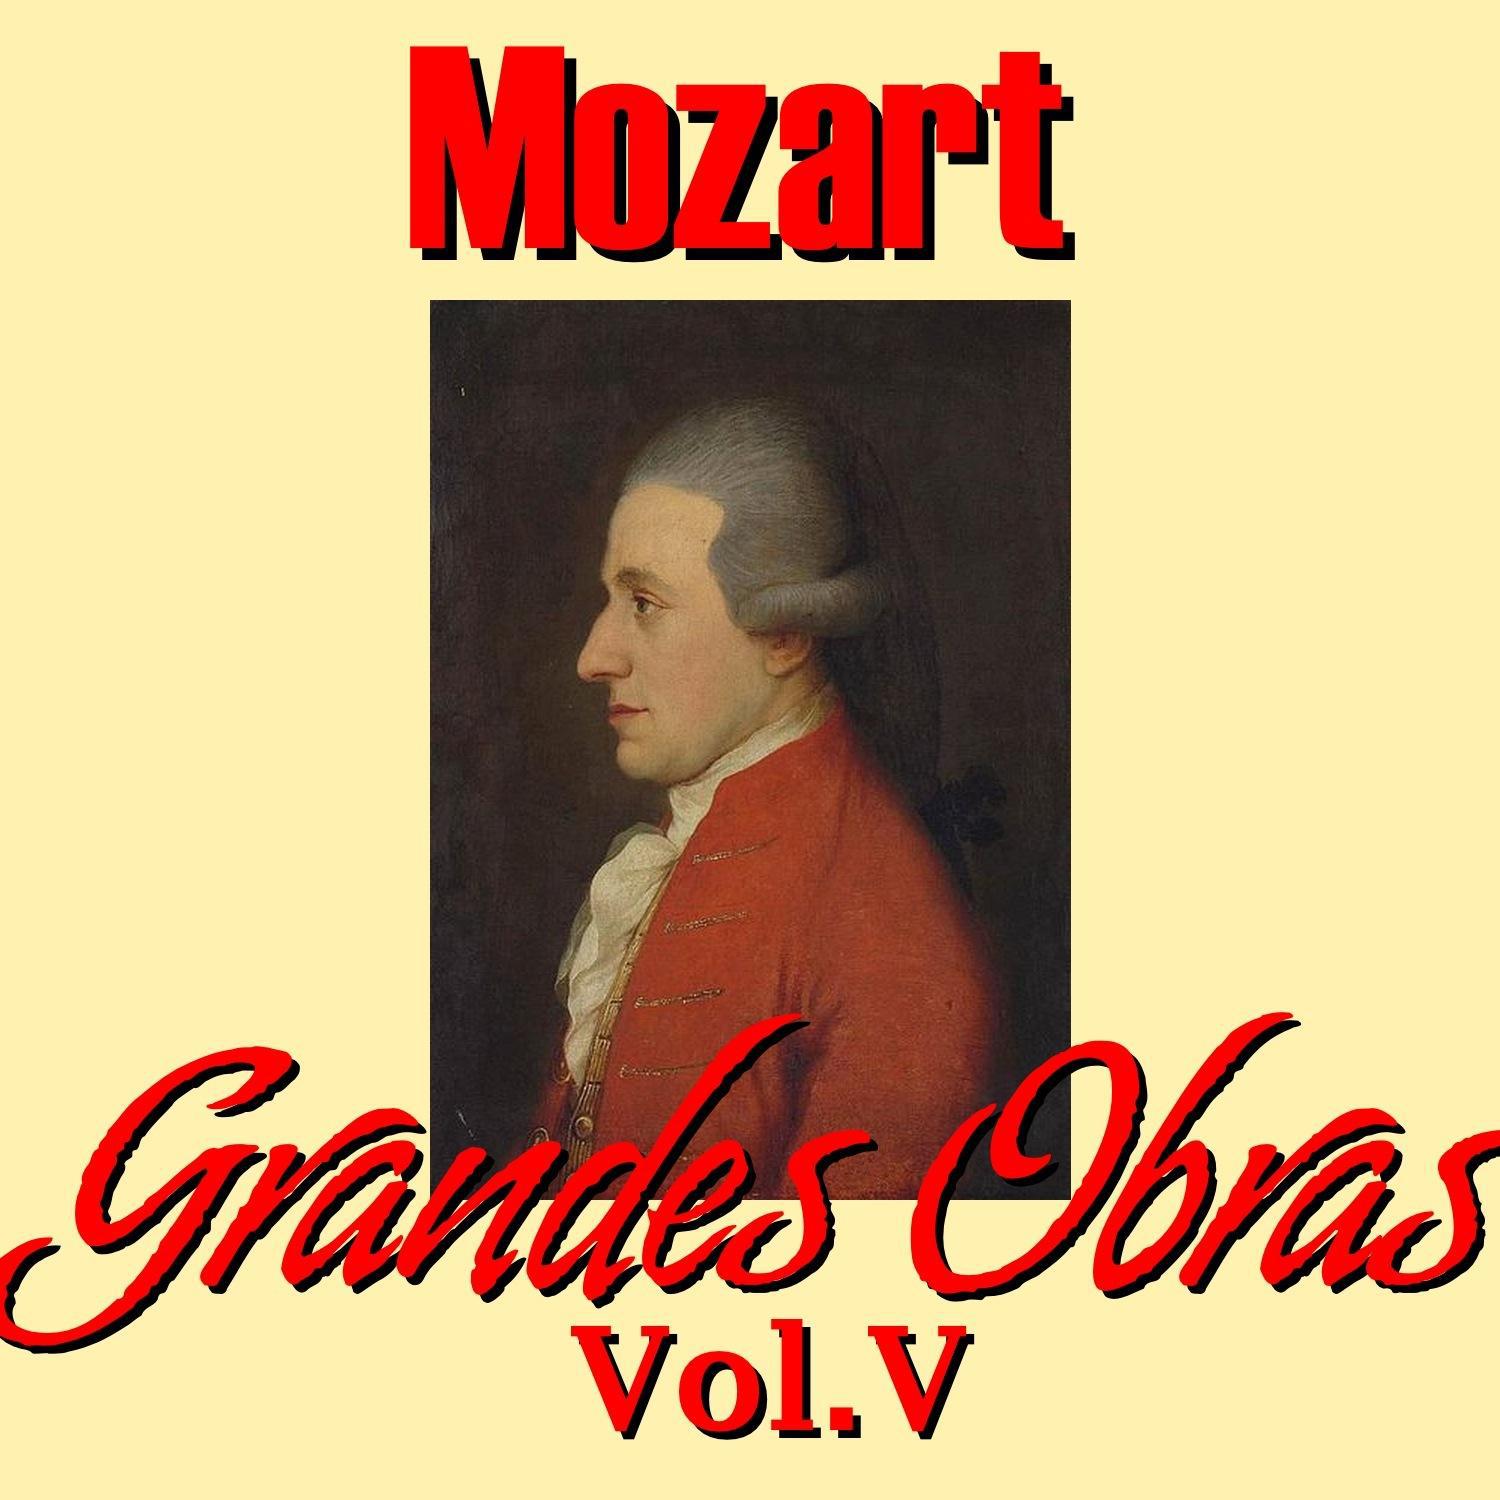 Mozart Grandes Obras Vol.V